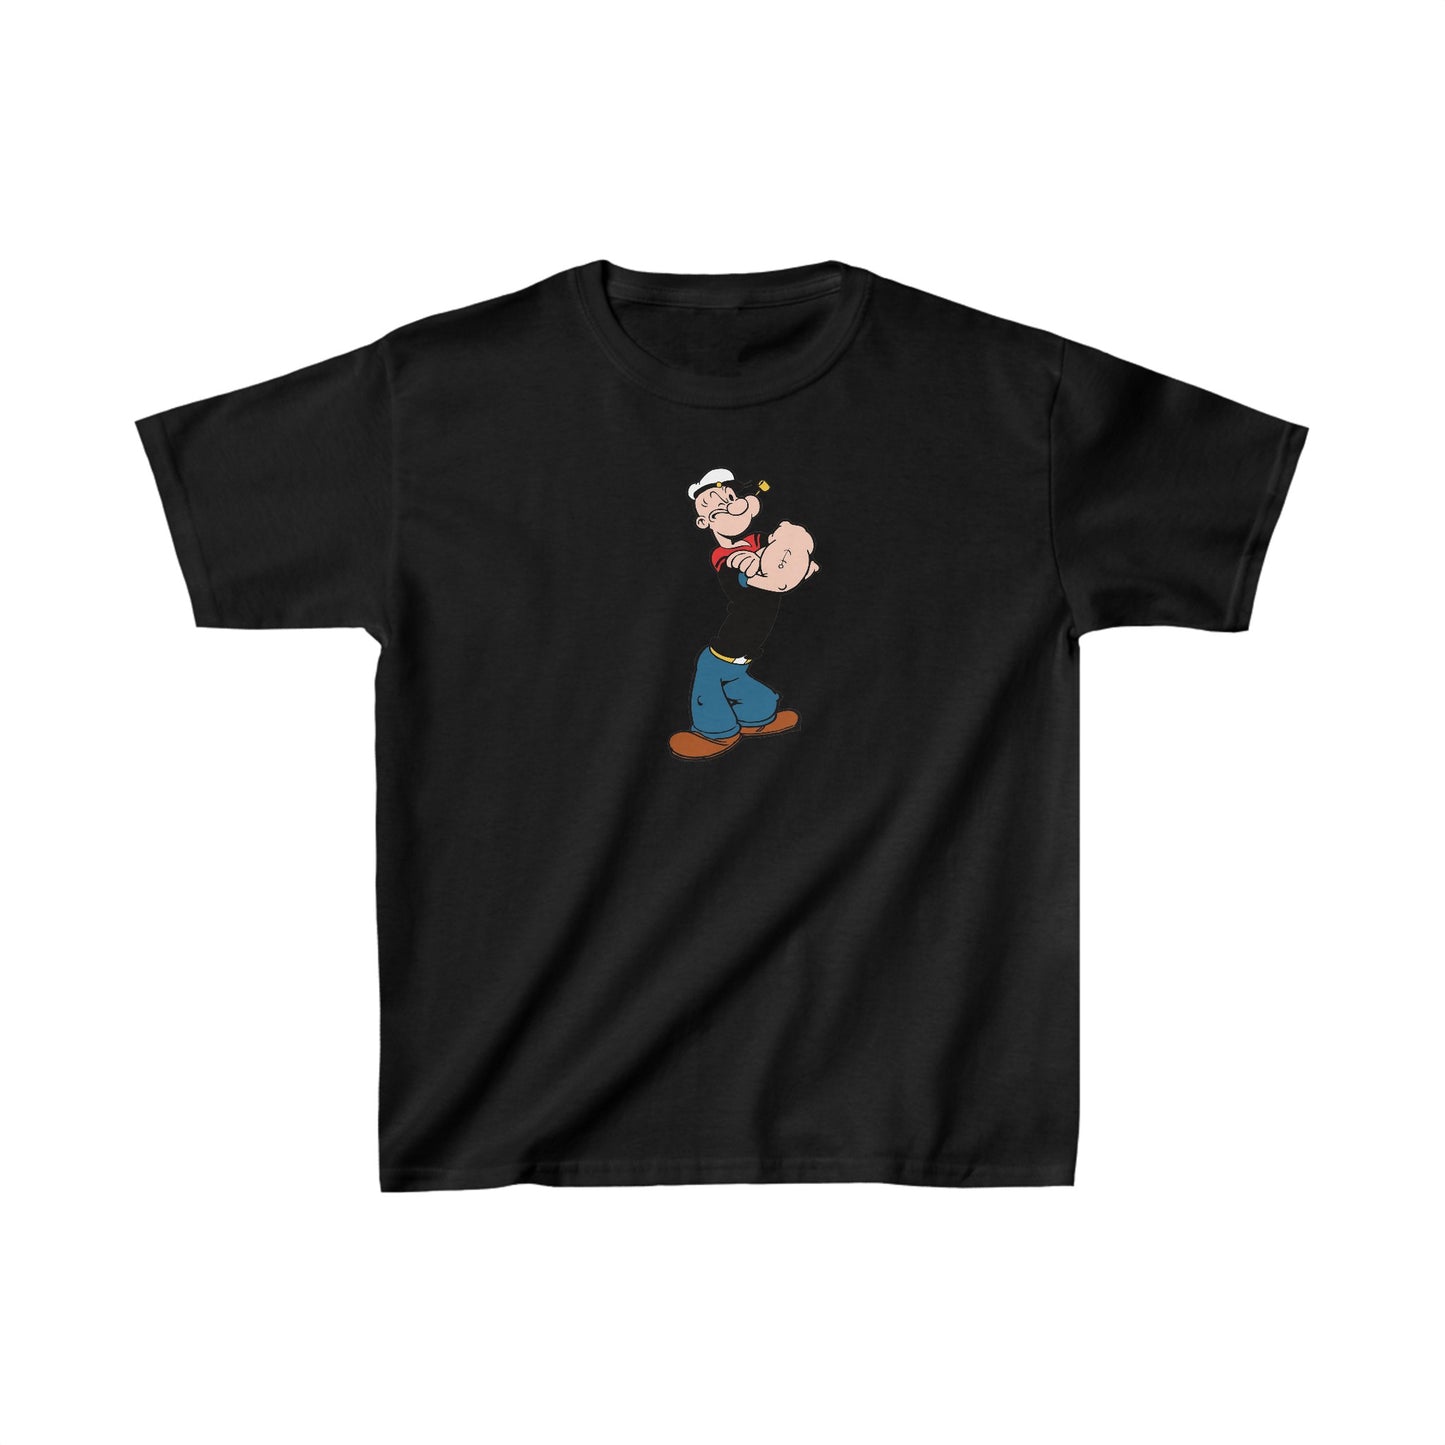 Popeye Youth T-Shirt